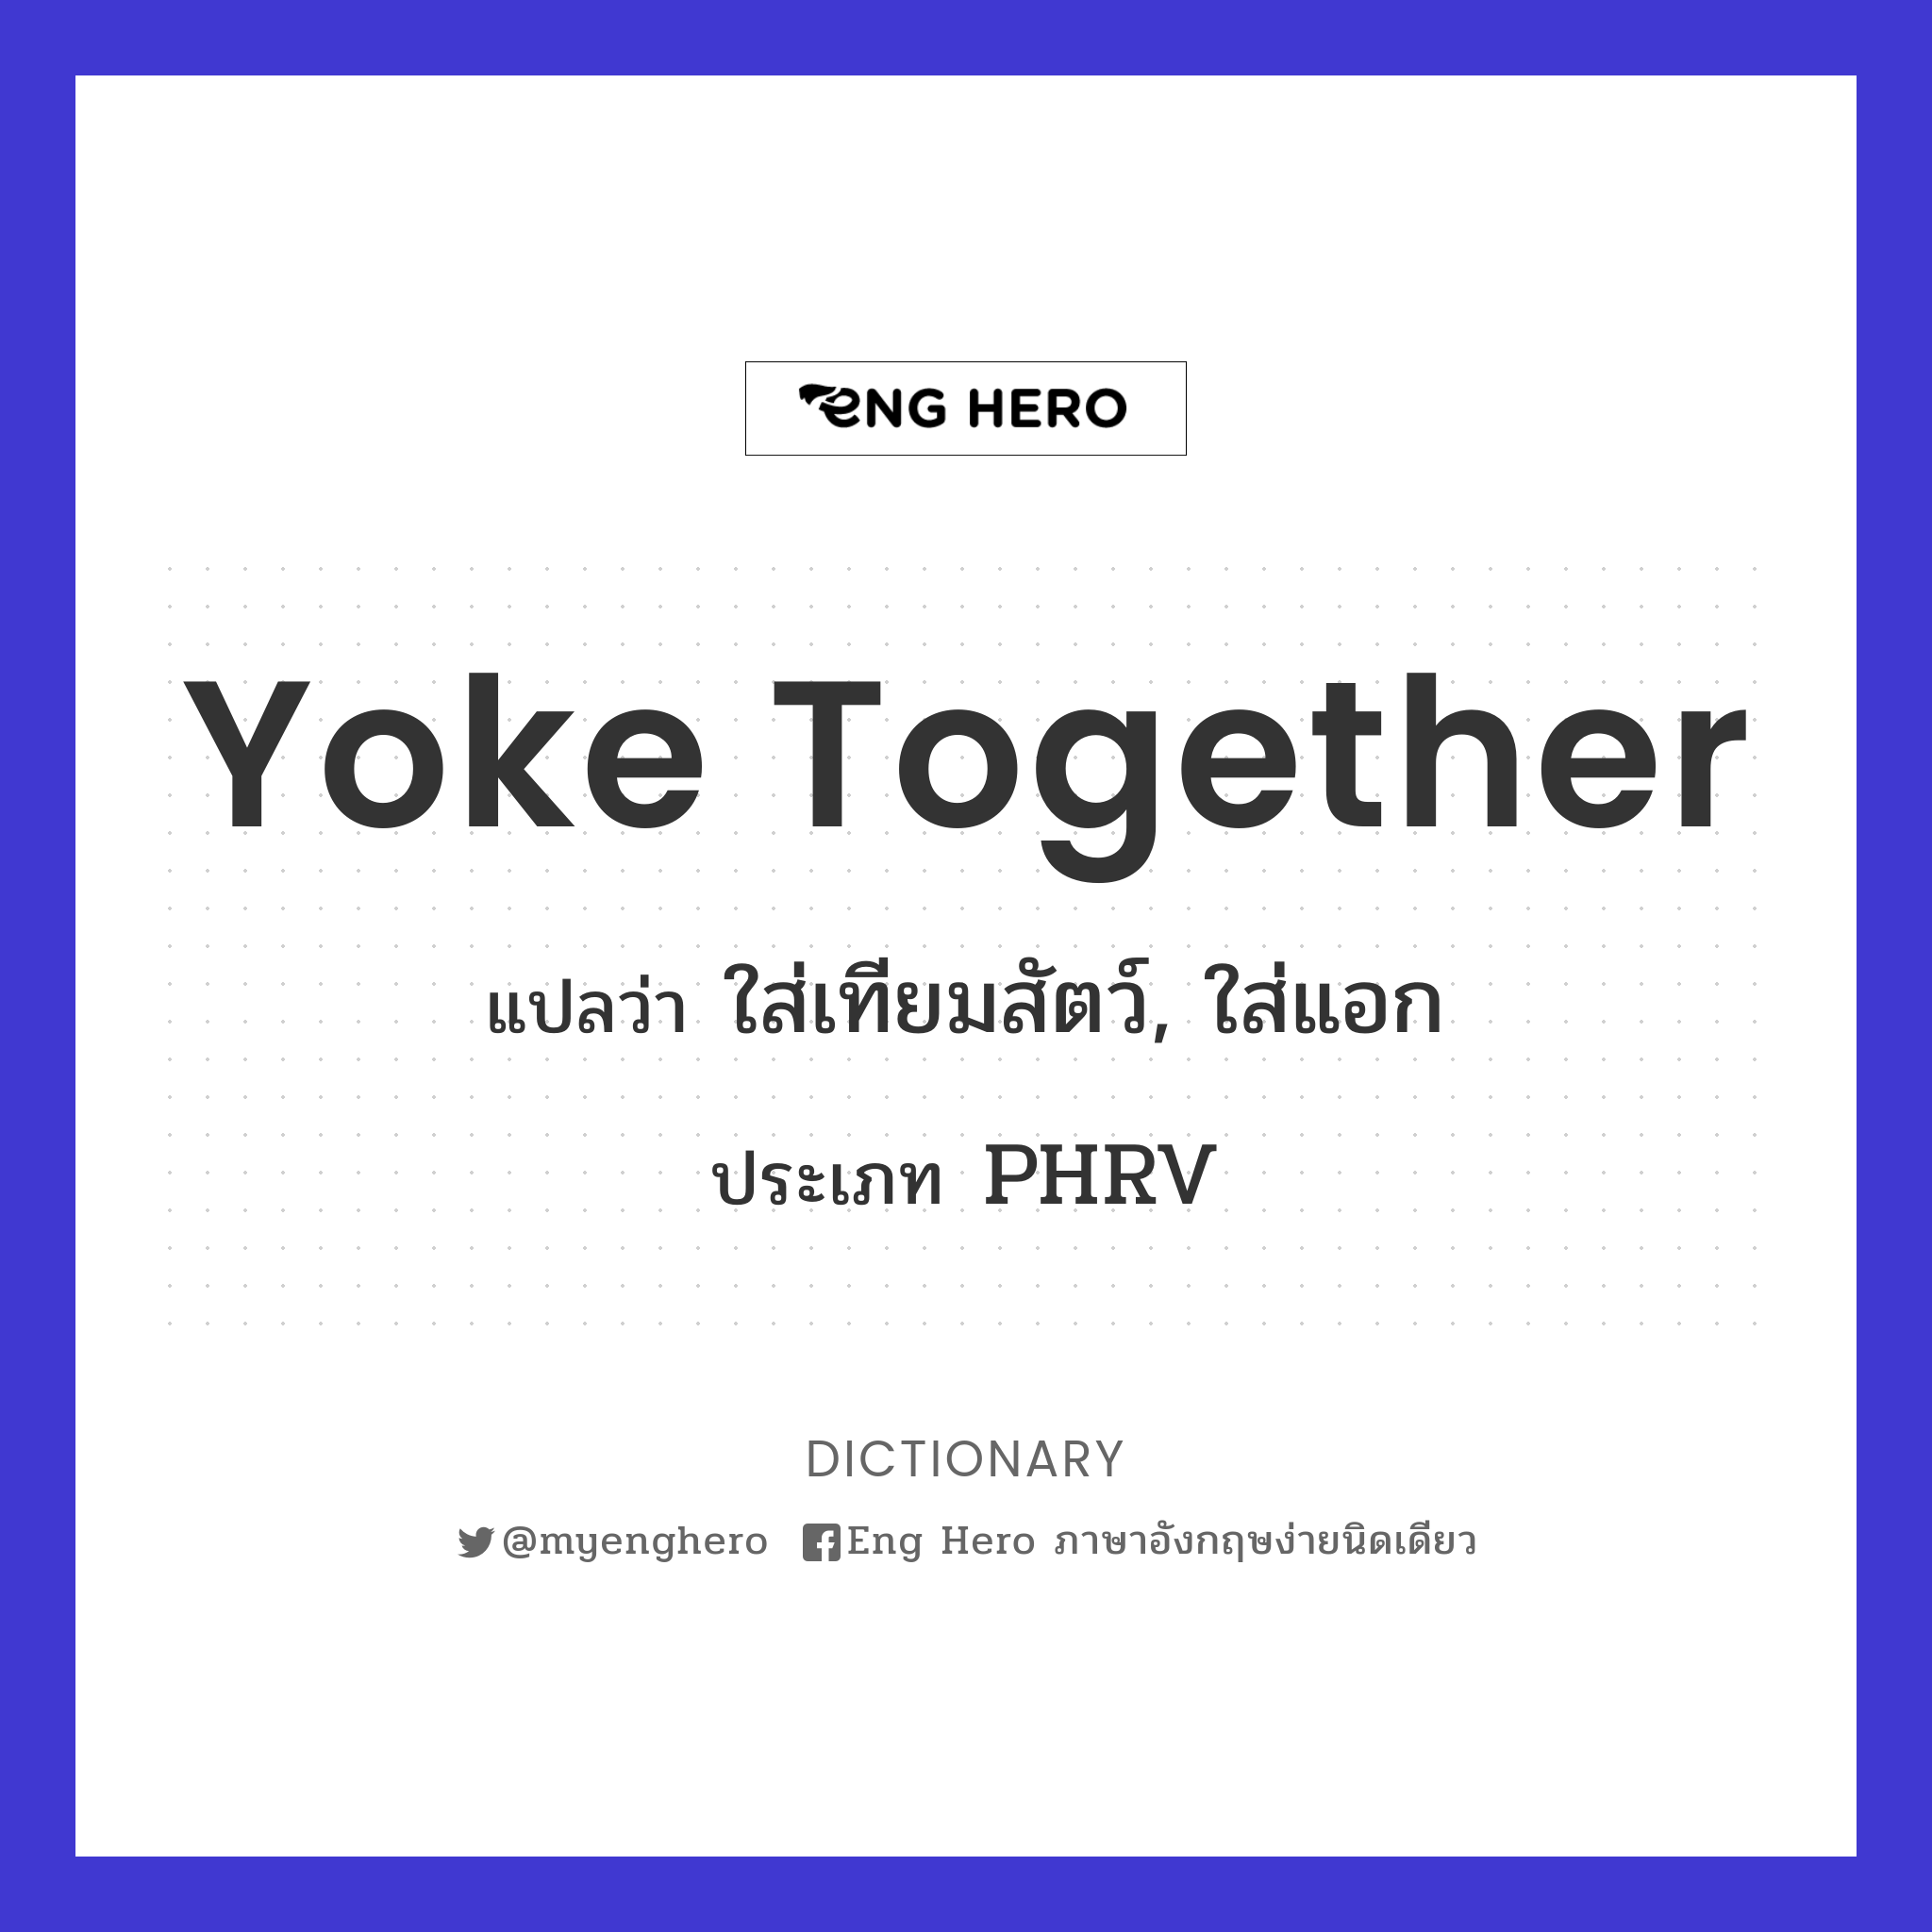 yoke together